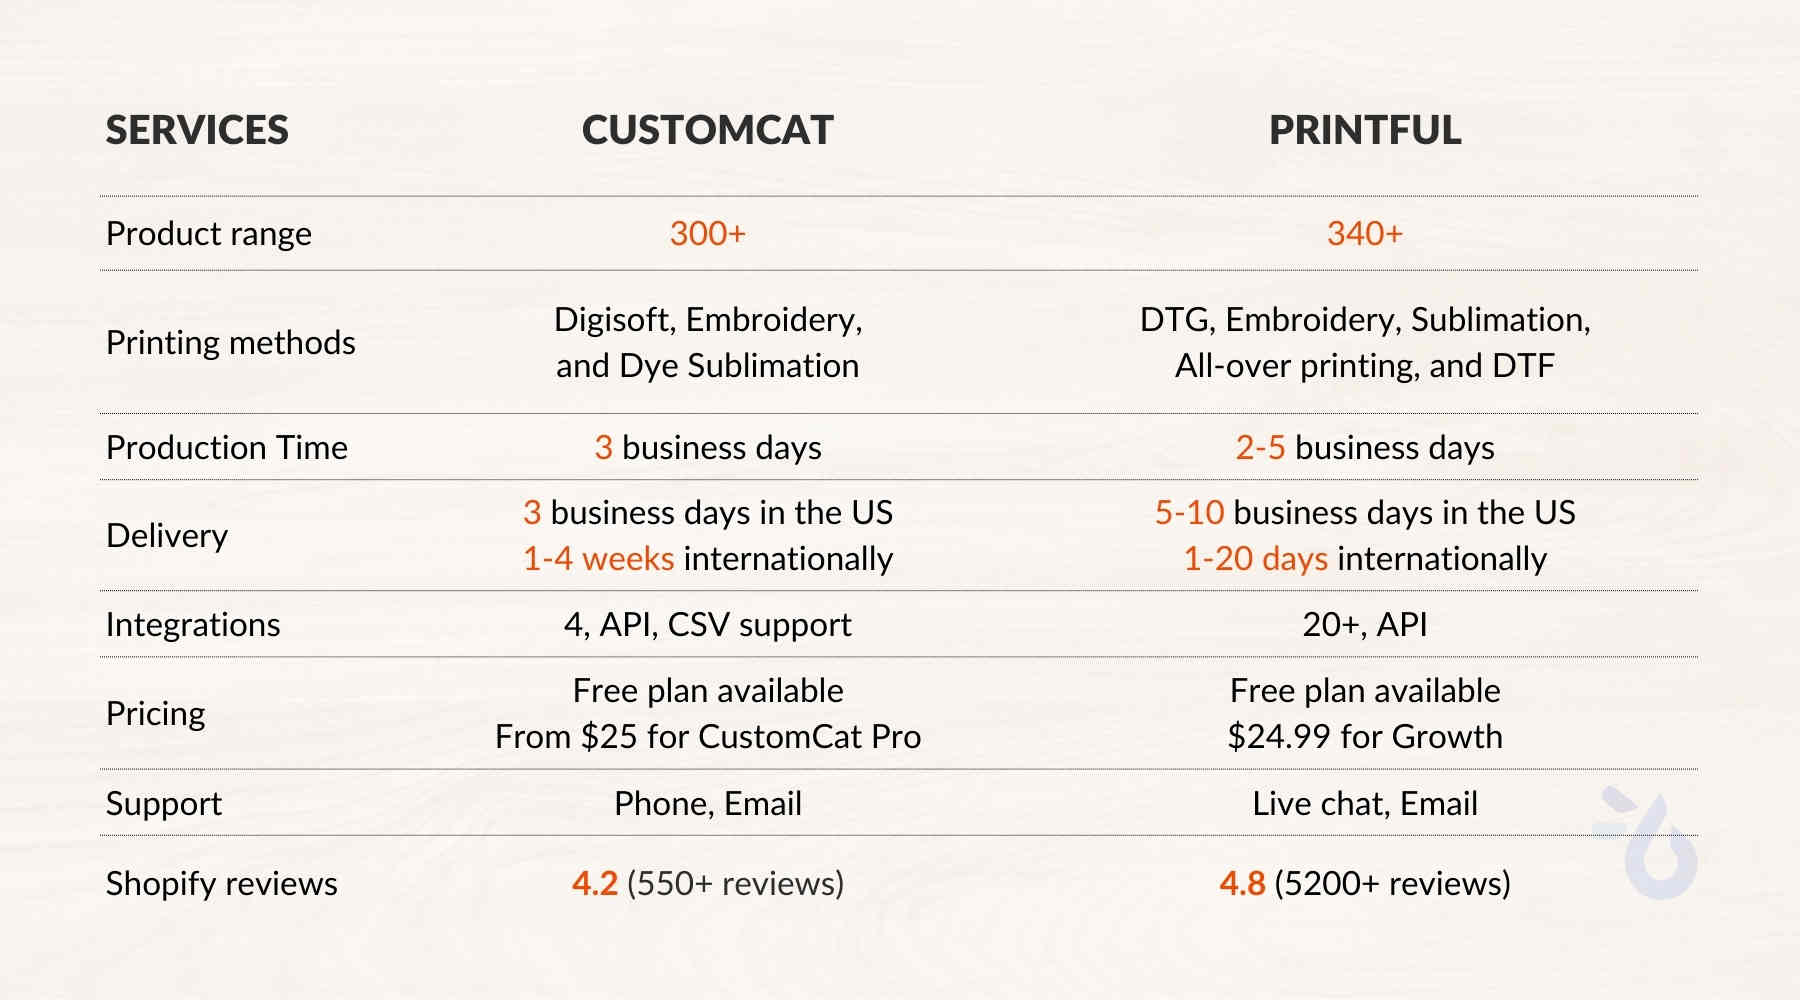 Customcat vs printful key services comparison